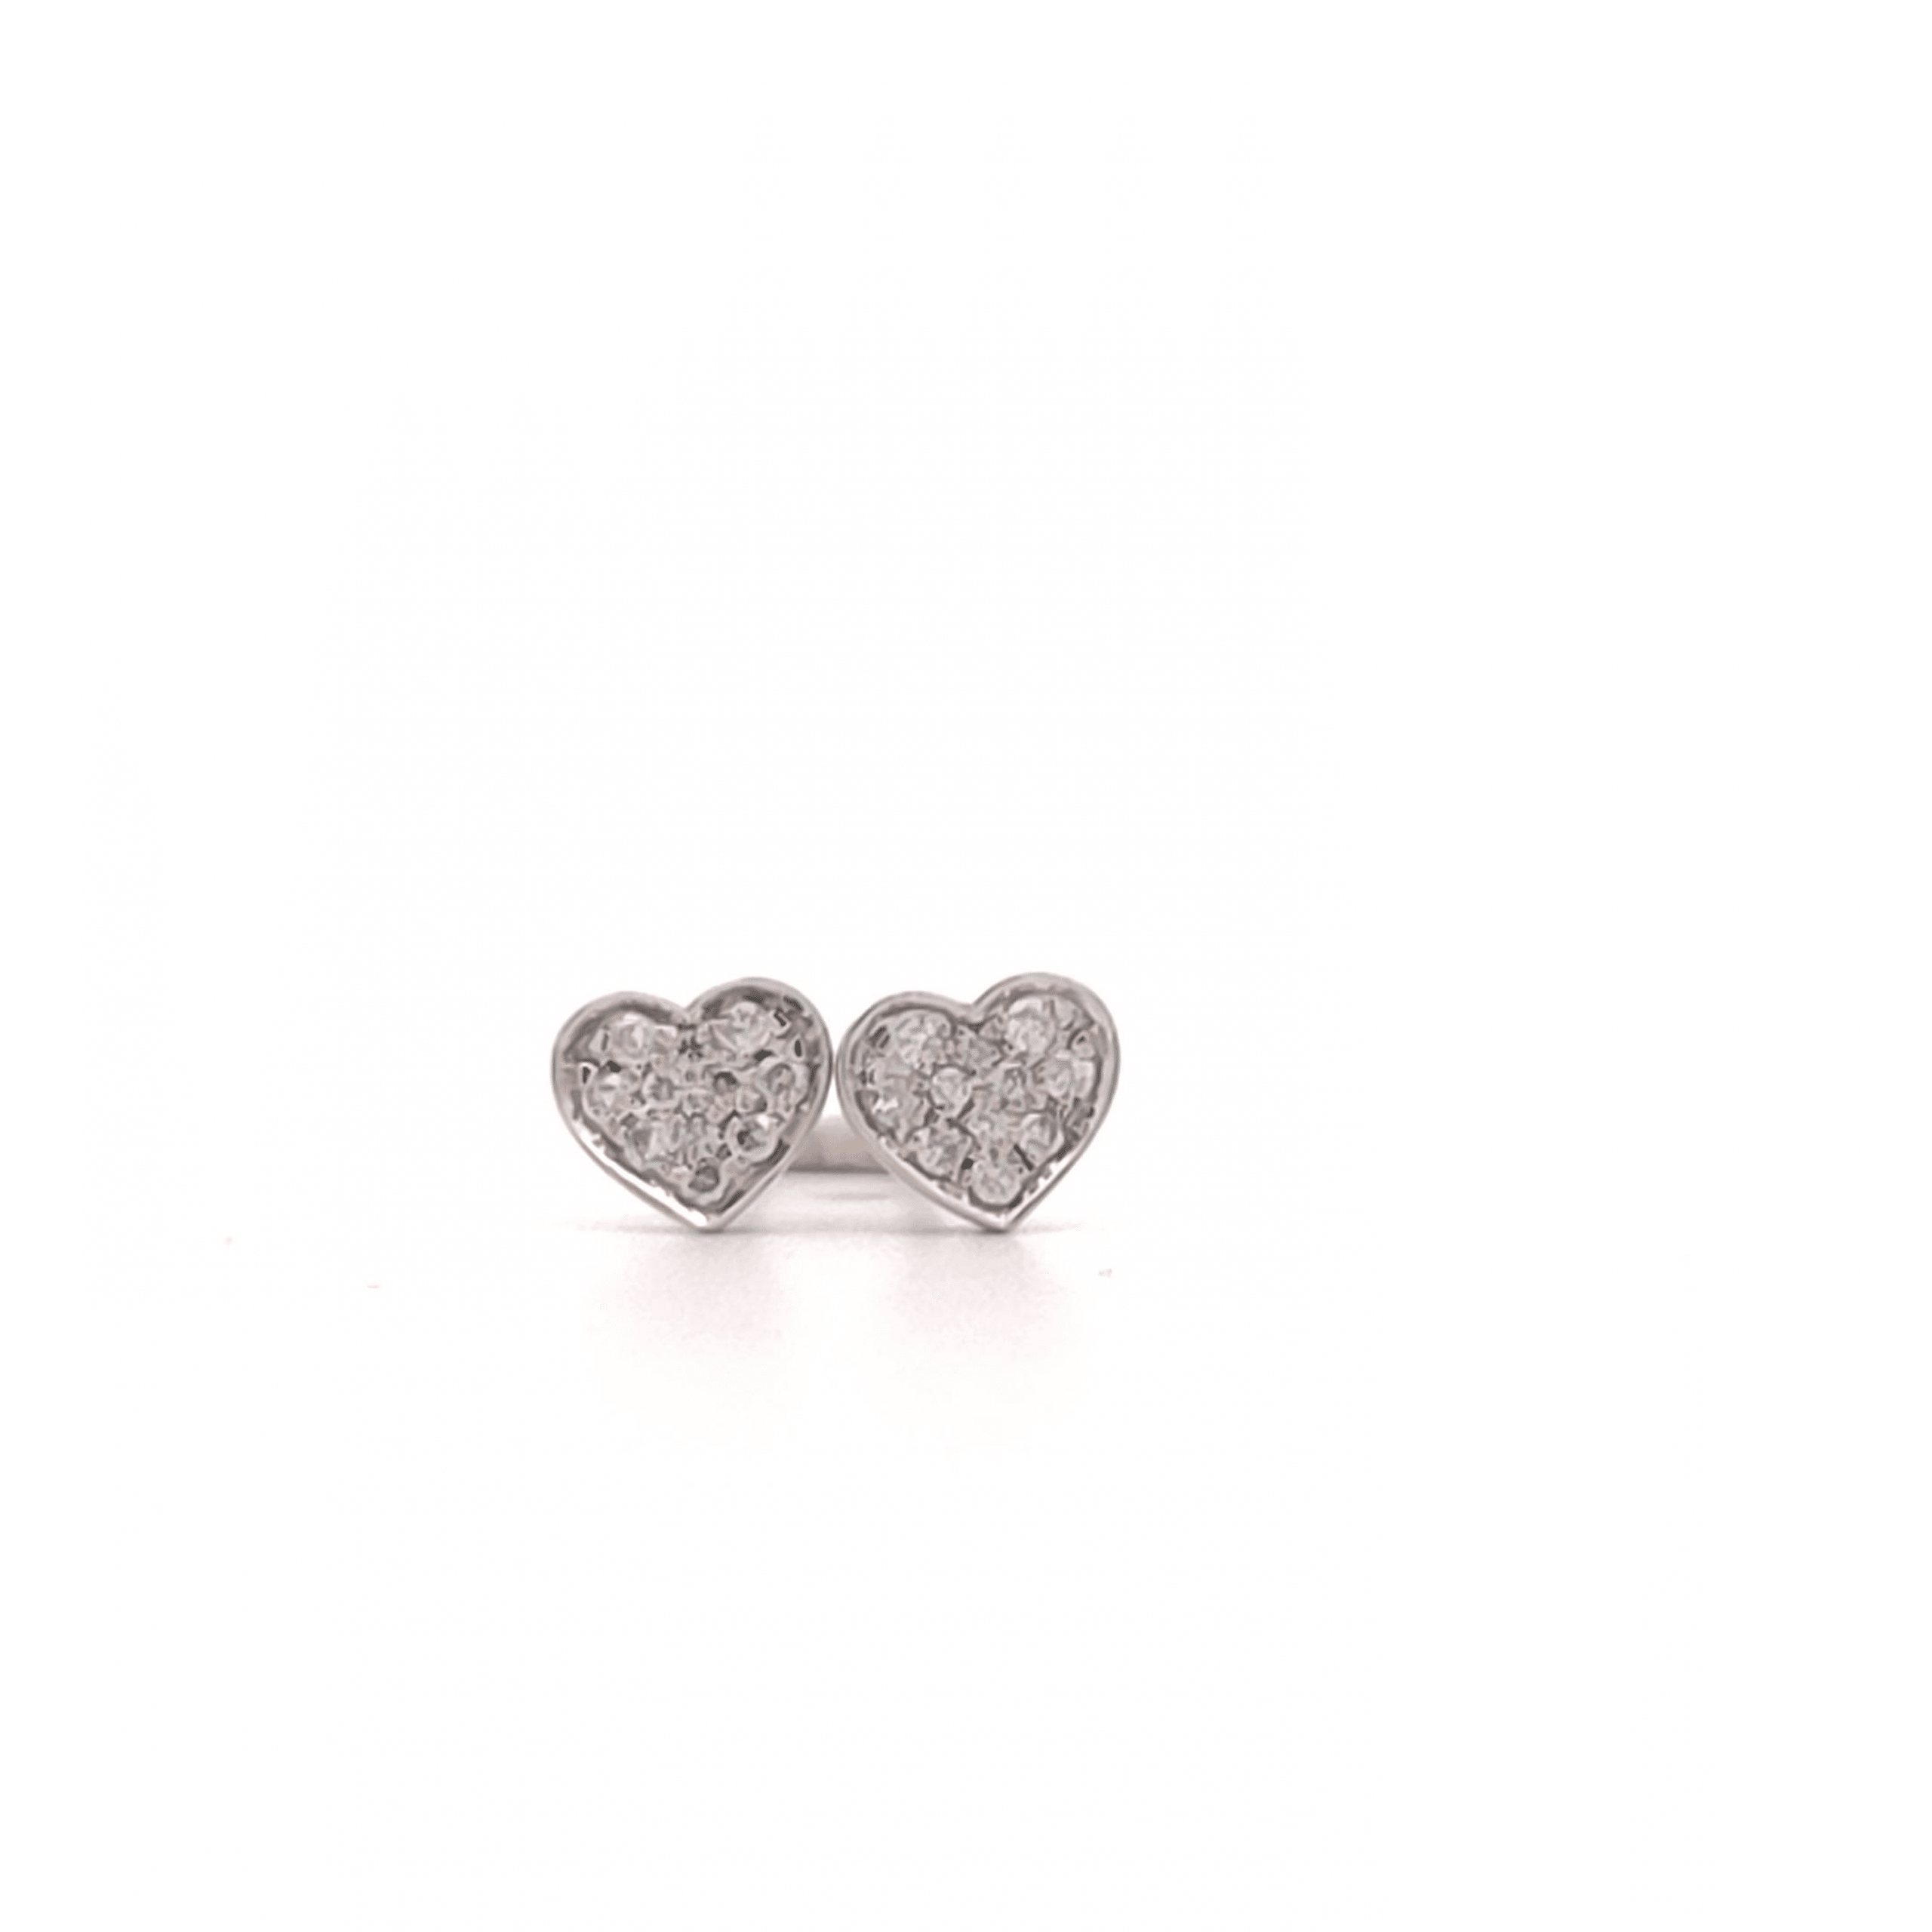 0.11ct Brilliant Cut Diamond Heart Shaped Stud Earrings in White Gold